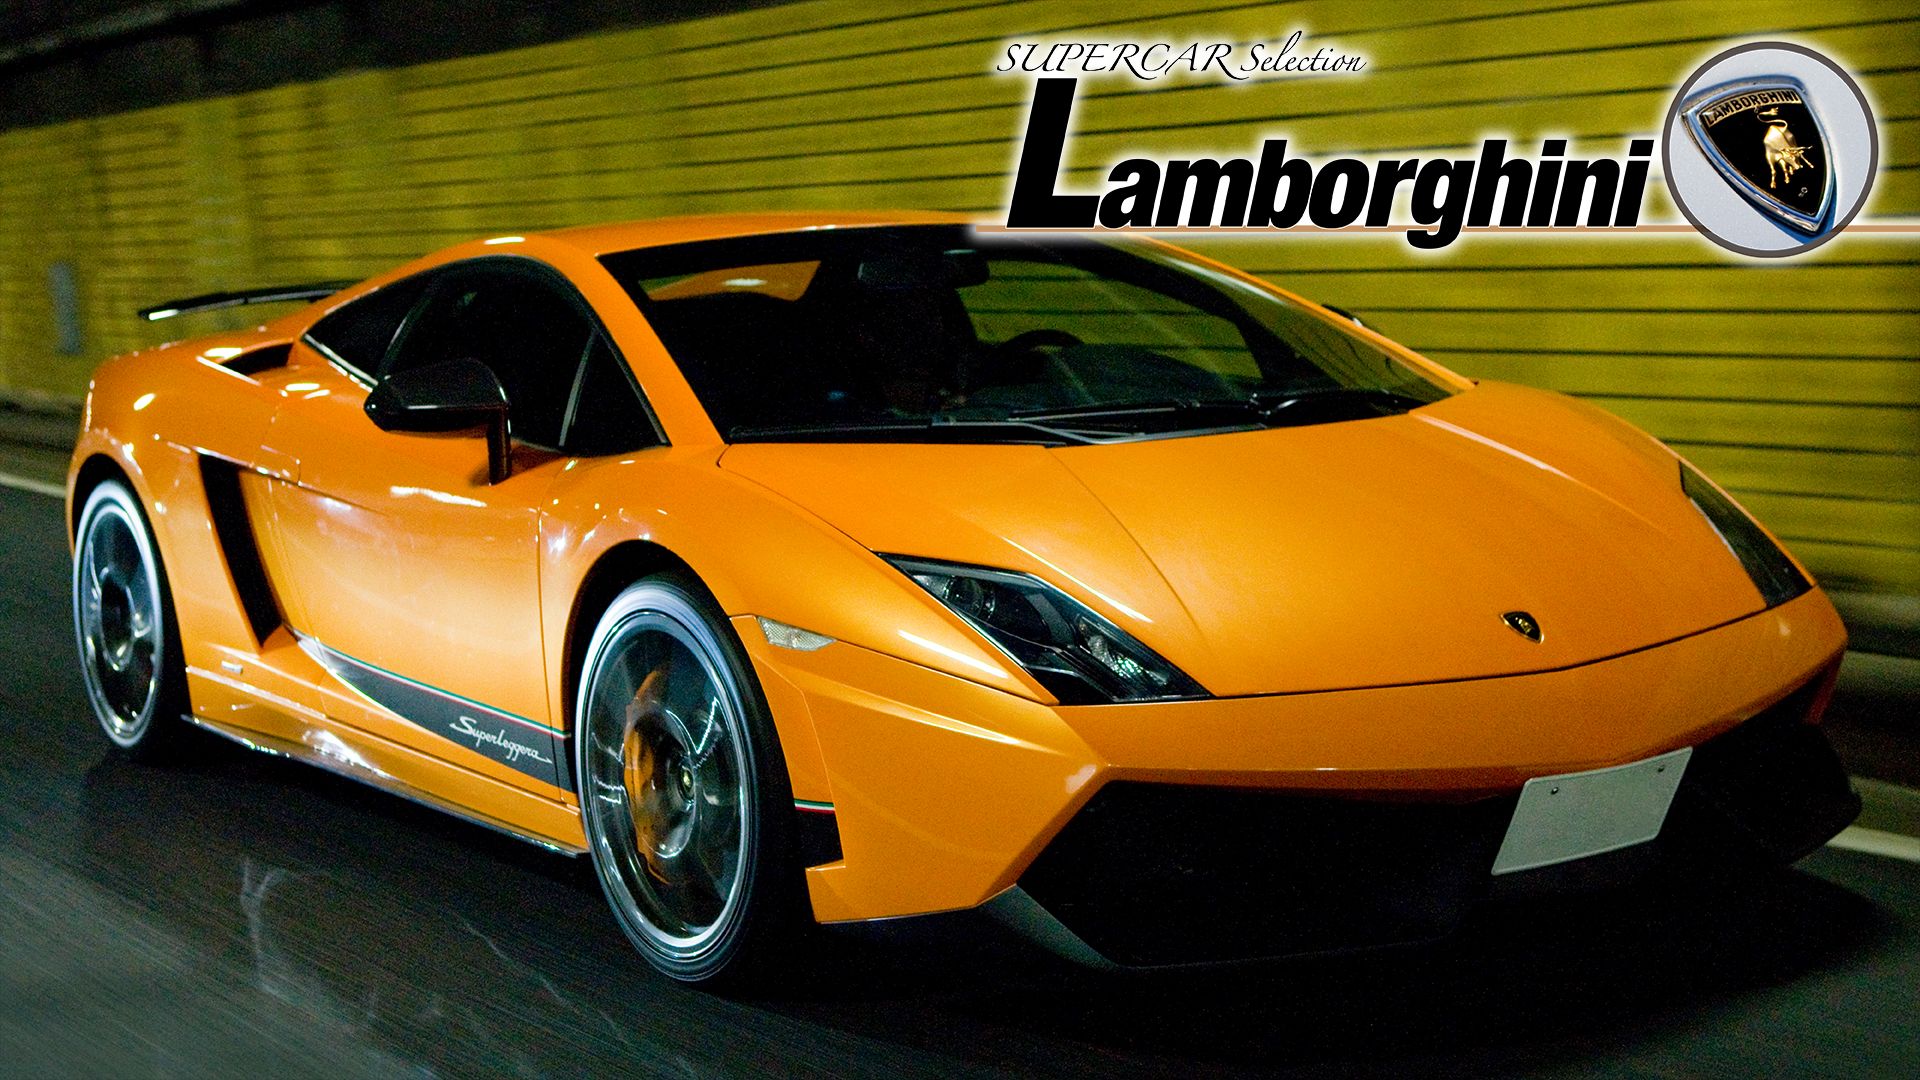 SUPERCAR SELECTION 「Lamborghini」